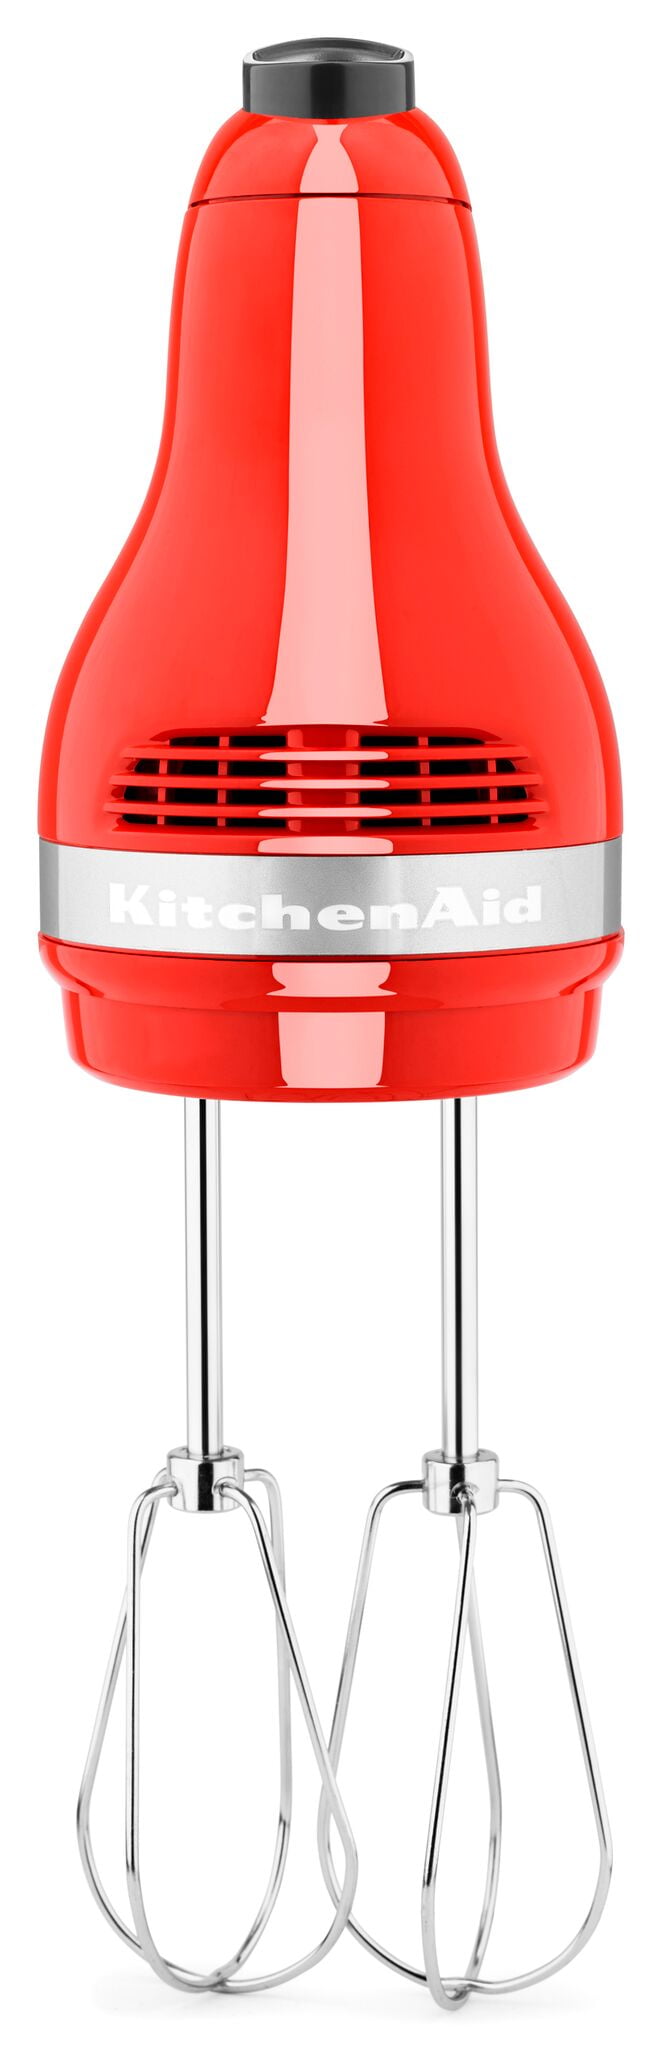 KitchenAid Cranberry 5 Speed Ultra Power Hand Mixer - Shop Blenders & Mixers  at H-E-B